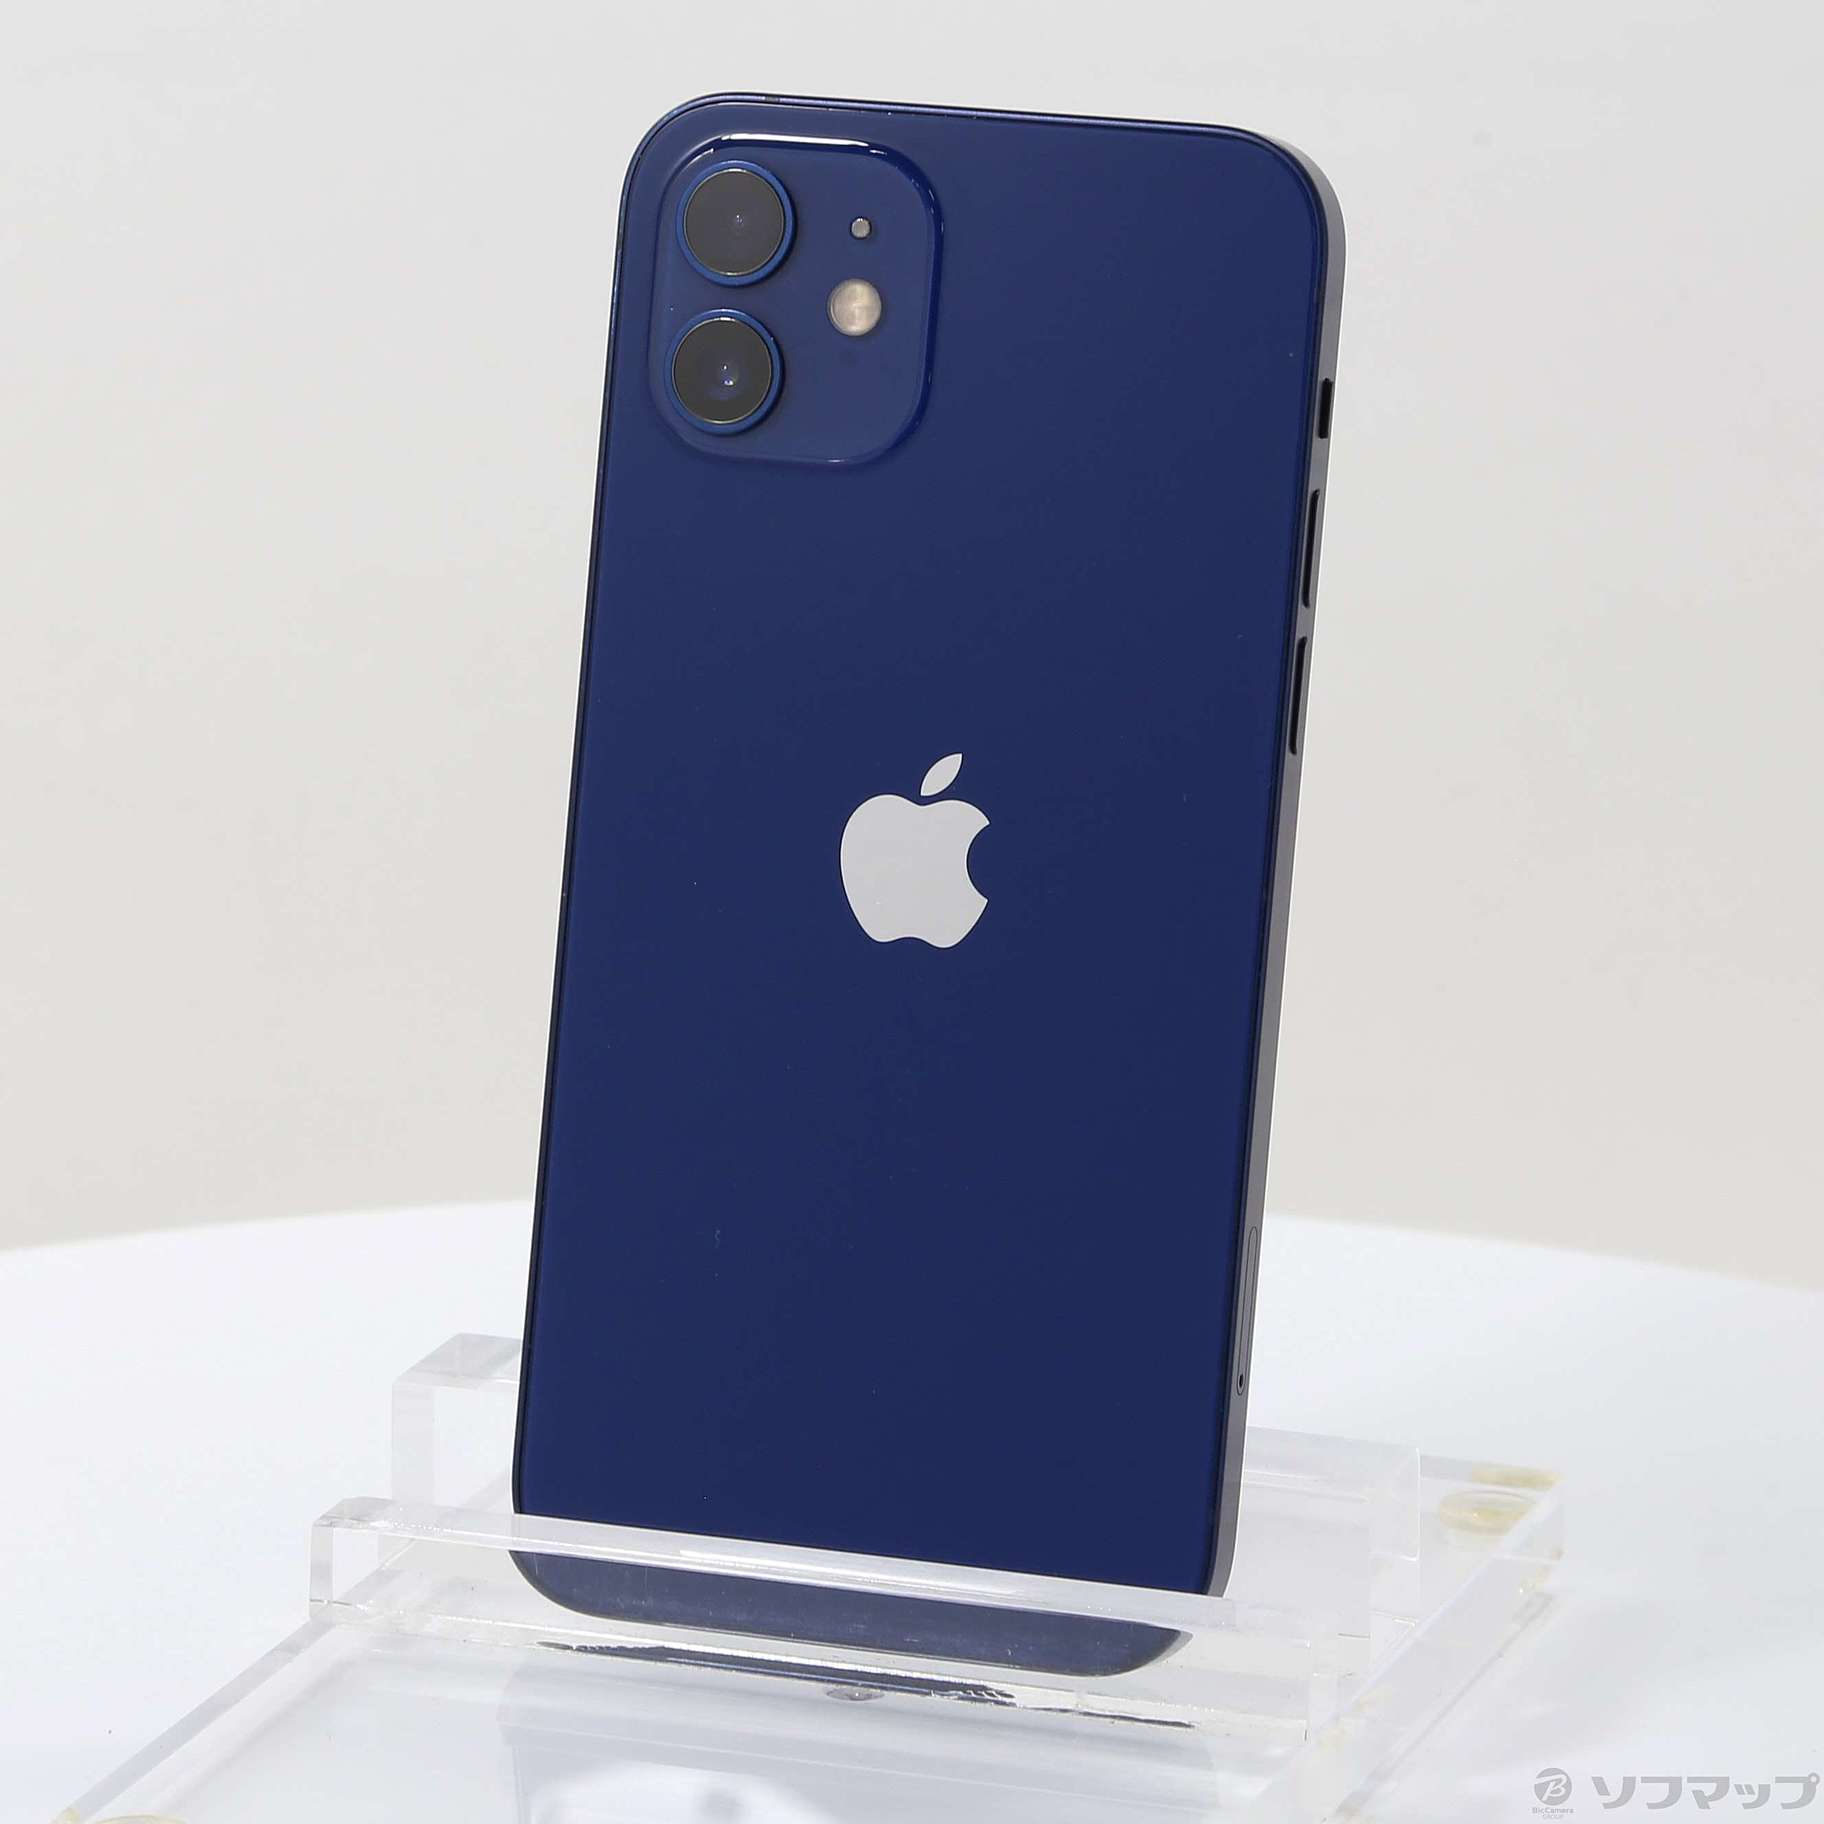 iPhone 12 128GB SIMフリー [ブルー] 中古(白ロム)価格比較 - 価格.com